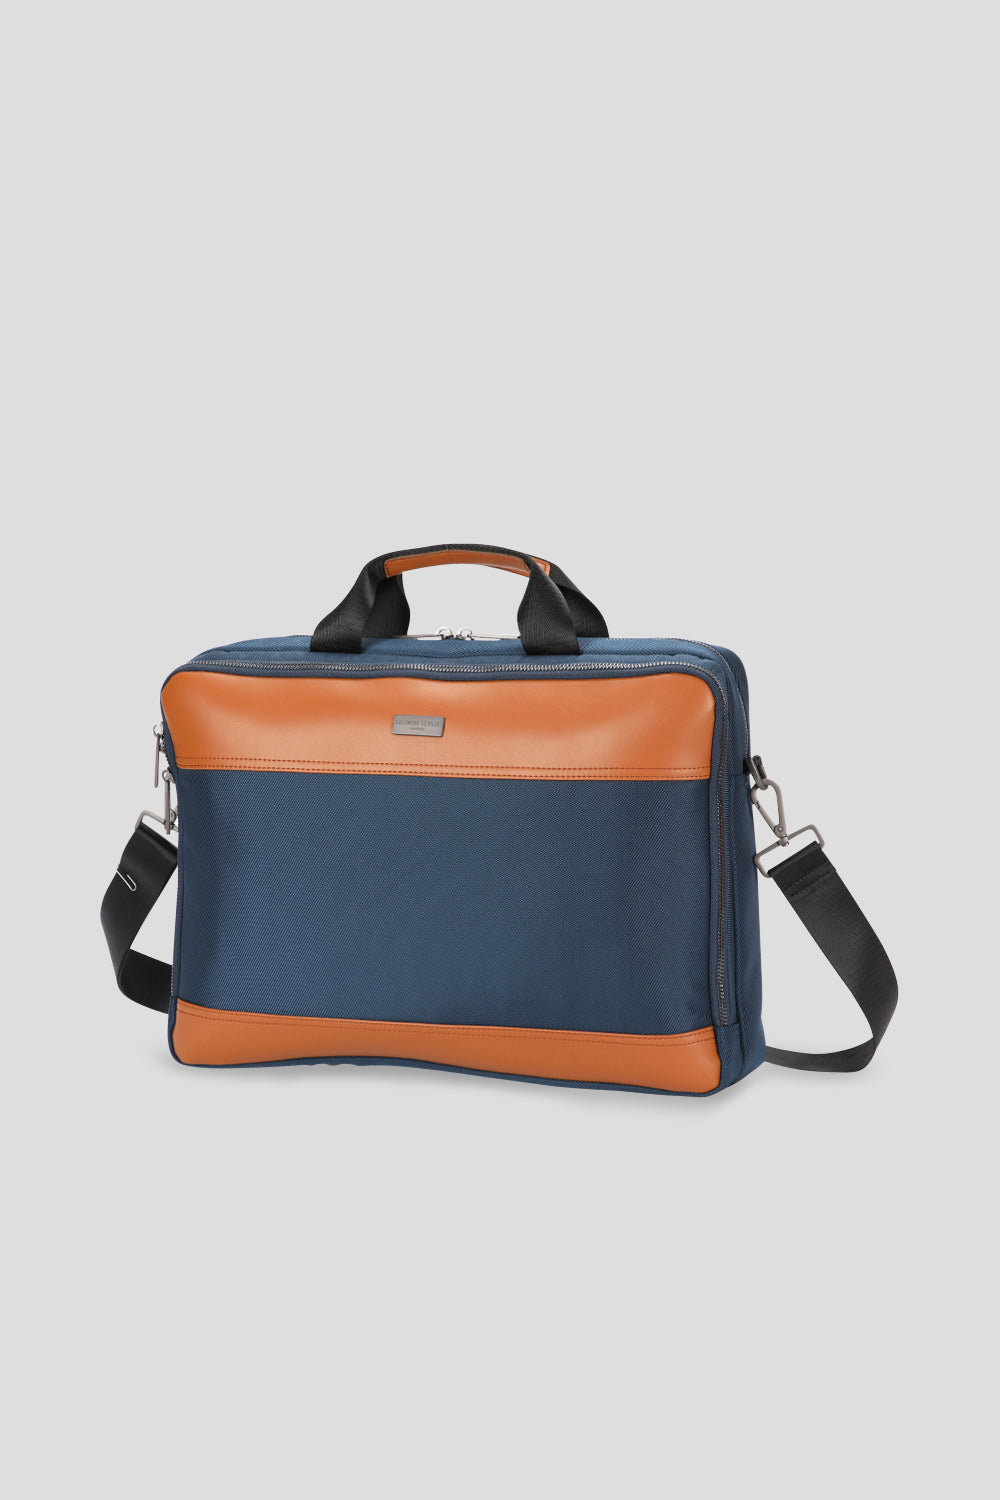 Euston office laptop bag in navy colour for men from oswin hyde